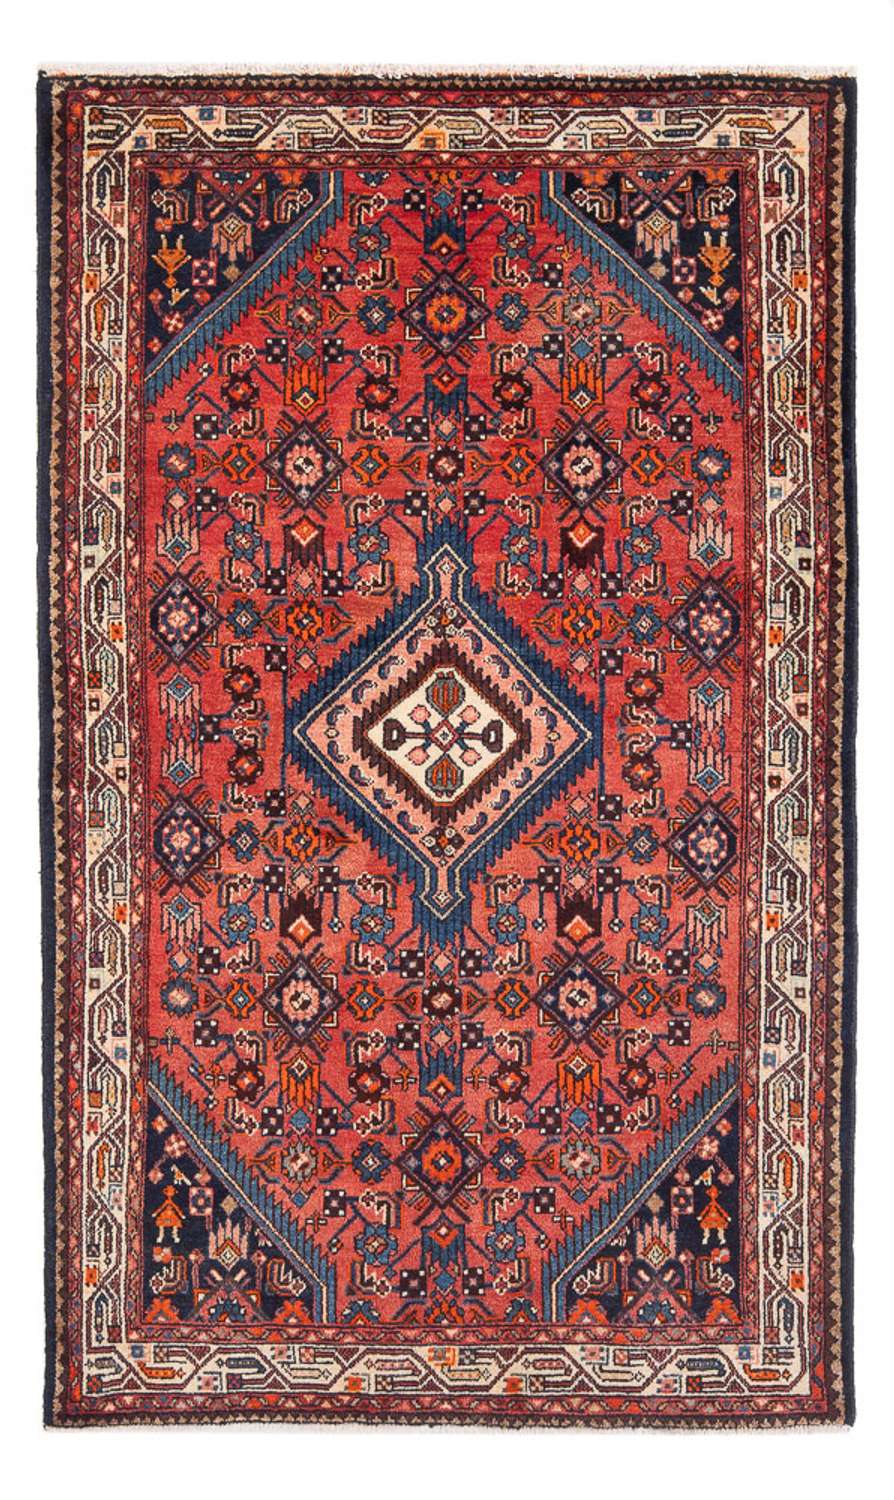 Persisk matta - Nomadic - 205 x 130 cm - röd